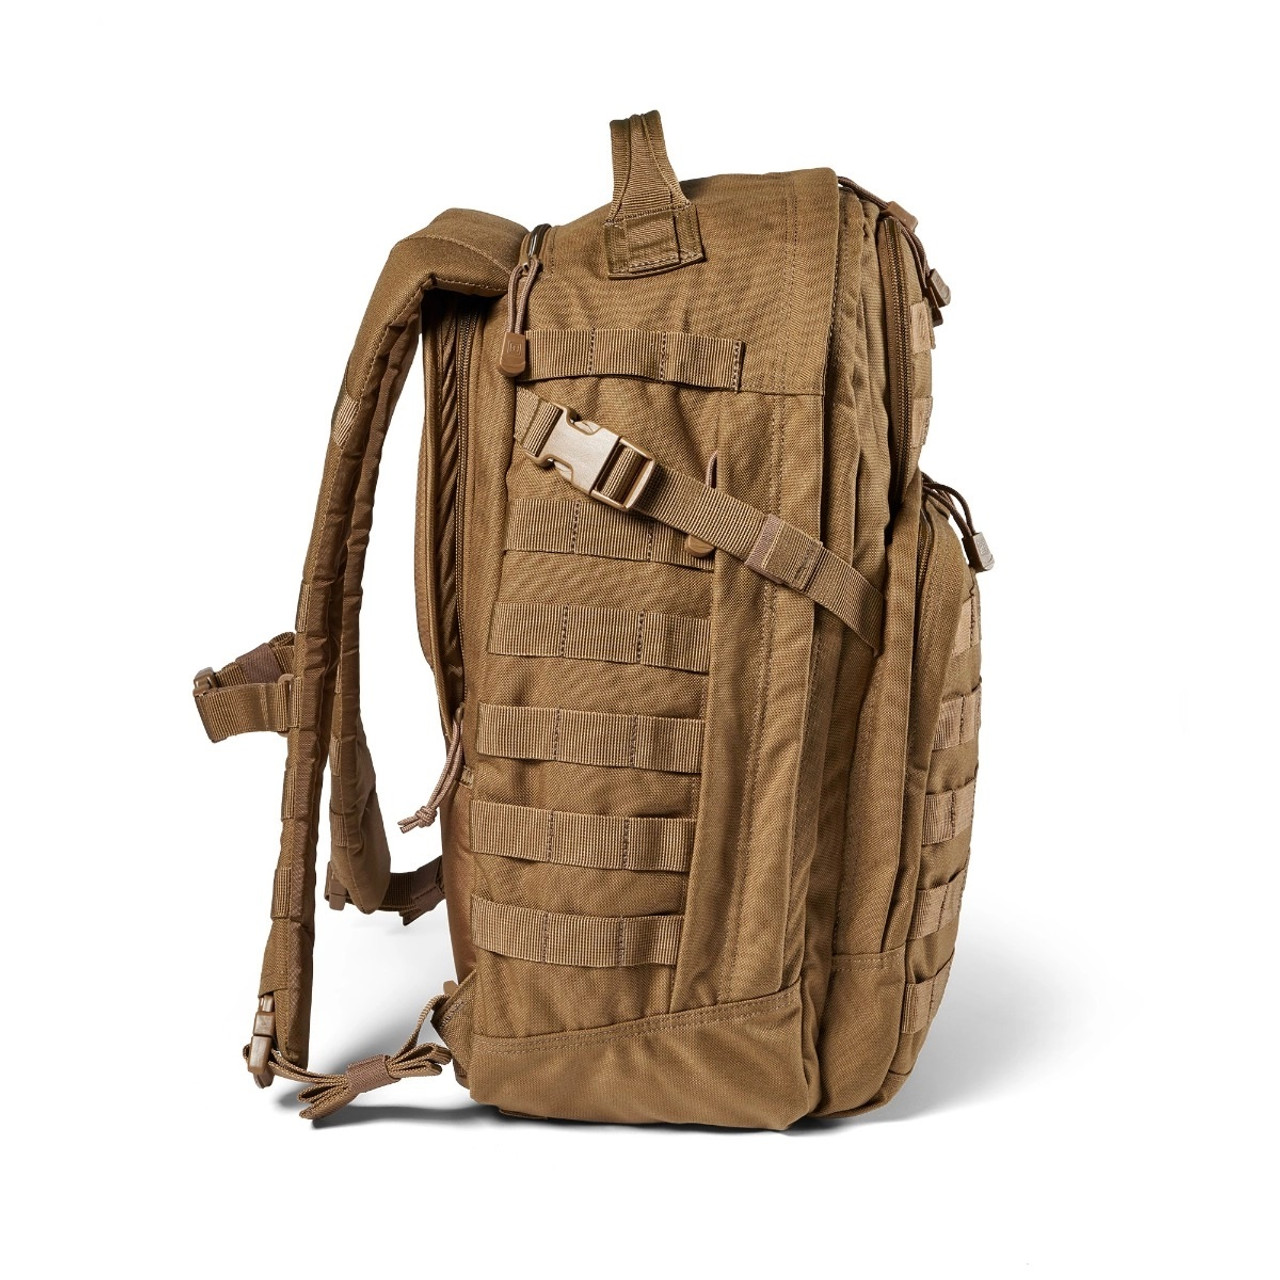 5.11 Tactical Rush24 2.0 Backpack 37L Pack Kangaroo